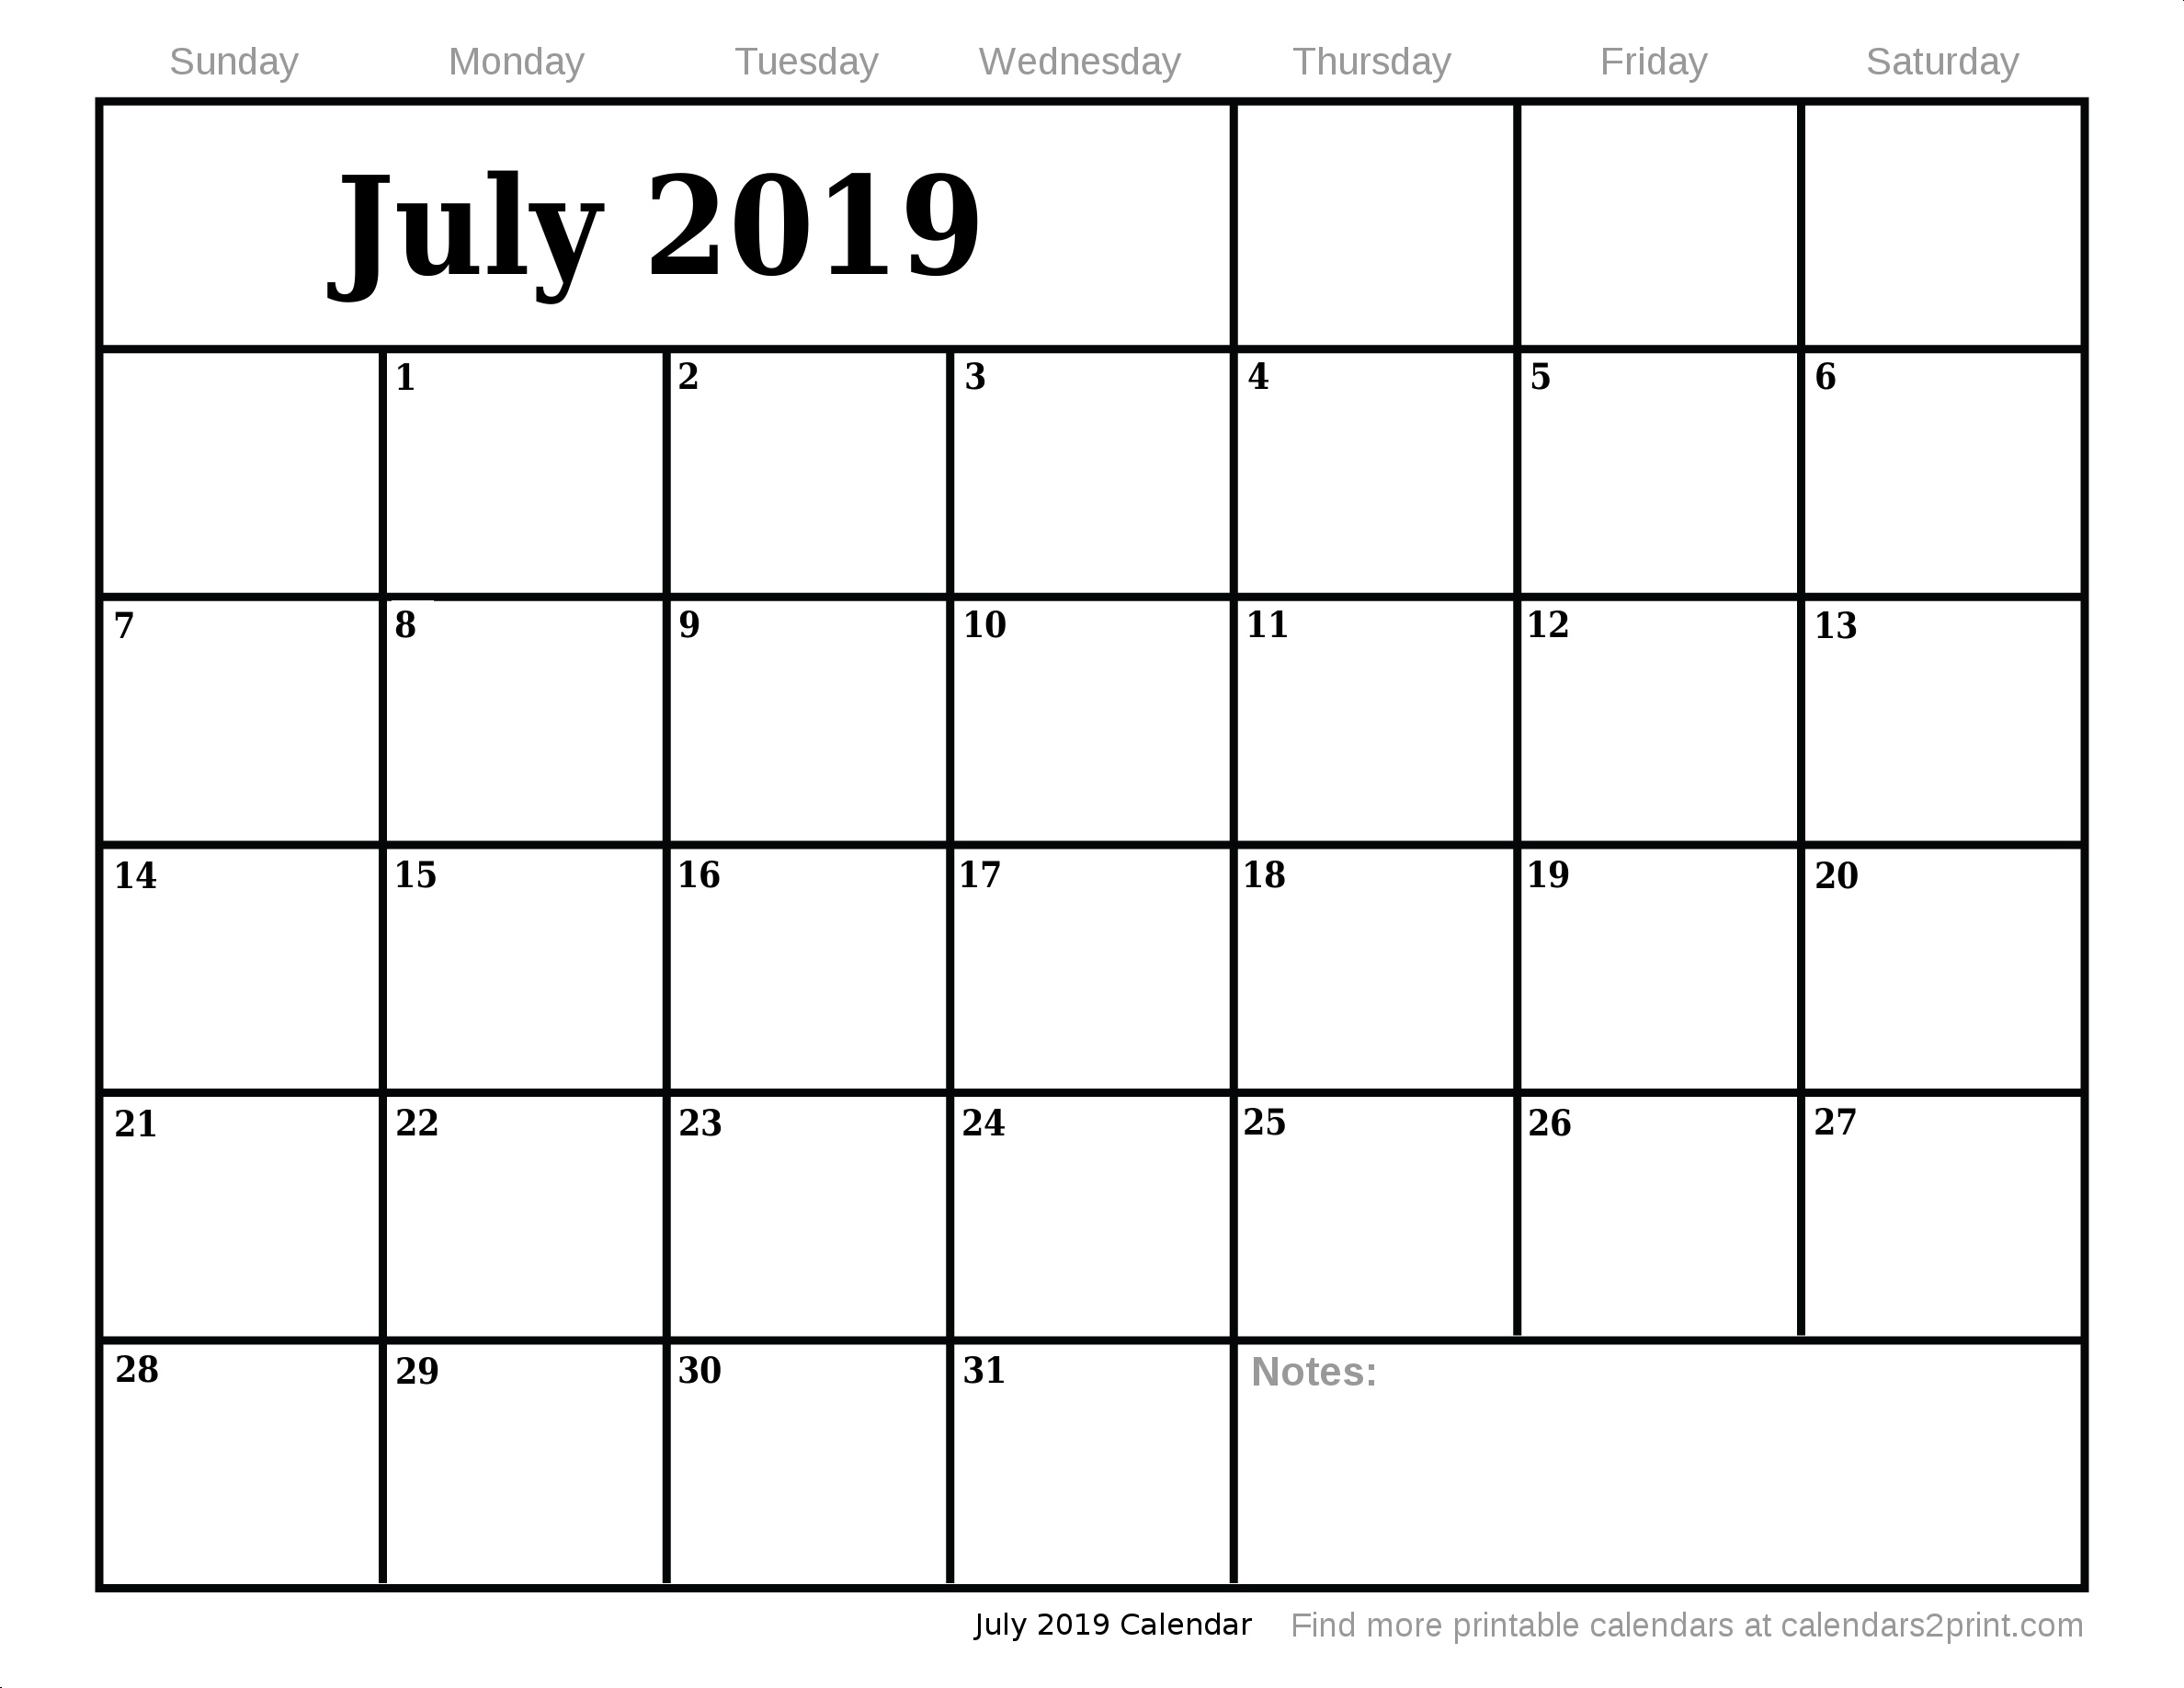 Jul 2019 Printable Calendar